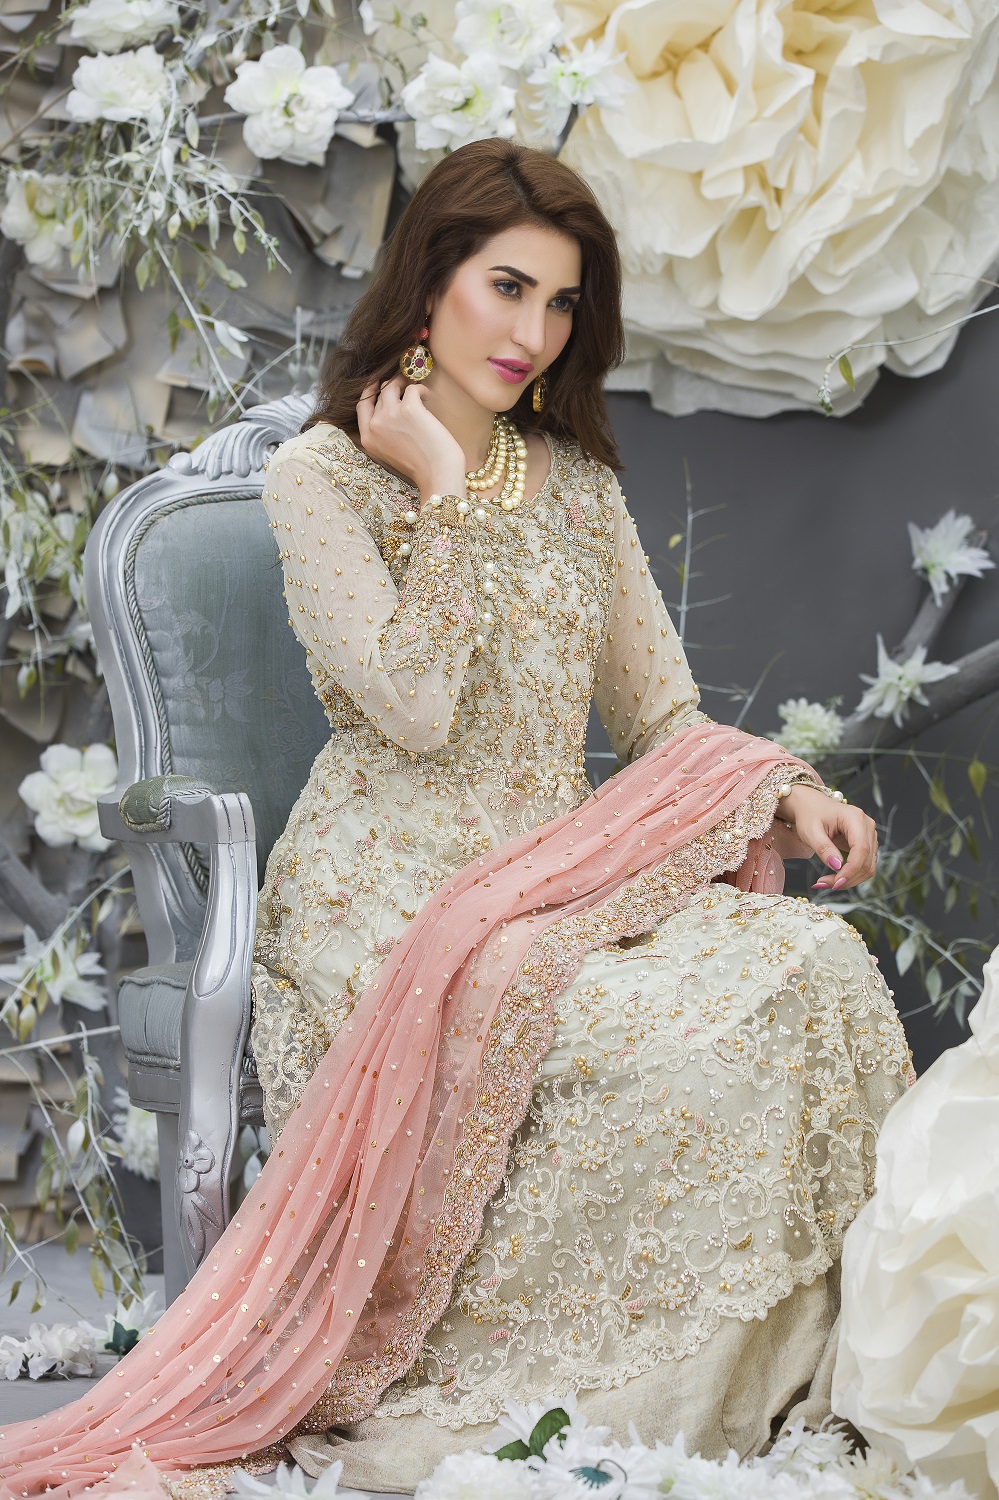 Gorgeous Pakistani Model Abeer Rizvi Looks Gorgeous In Her Latest Photo shoot